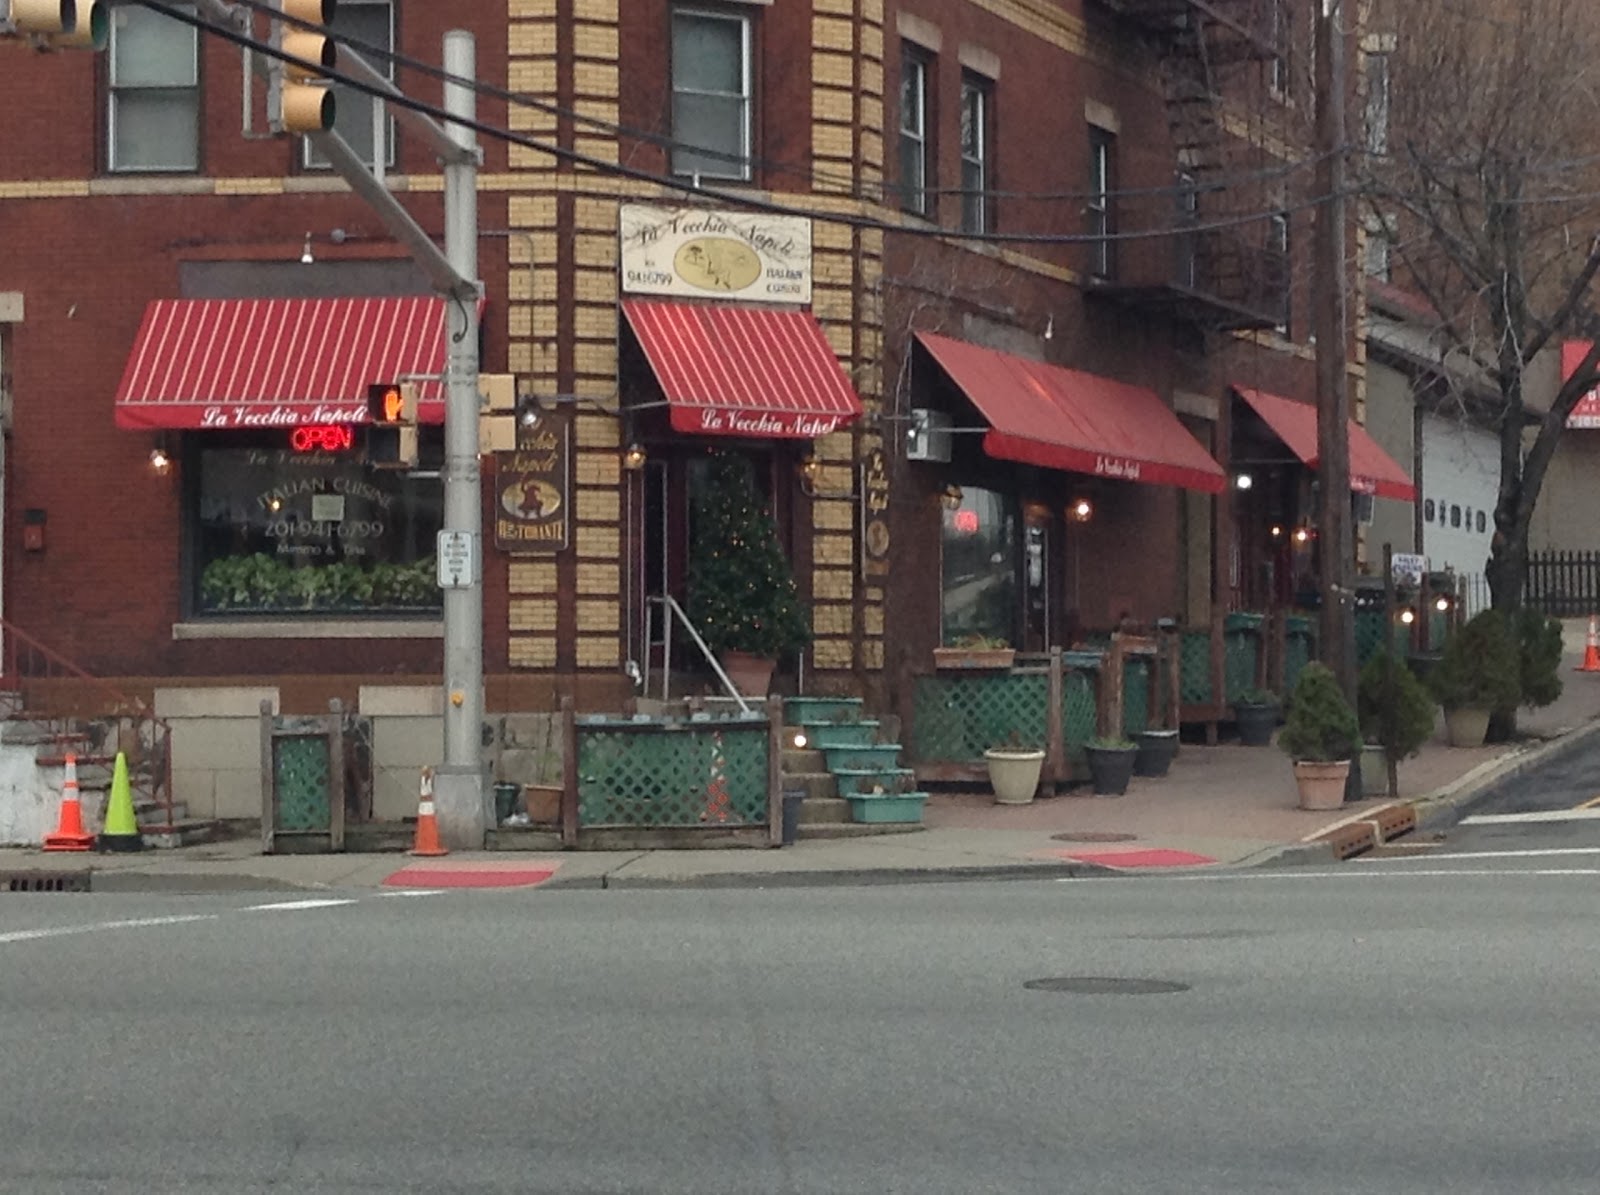 Photo of La Vecchia Napoli in Edgewater City, New Jersey, United States - 1 Picture of Restaurant, Food, Point of interest, Establishment, Bar